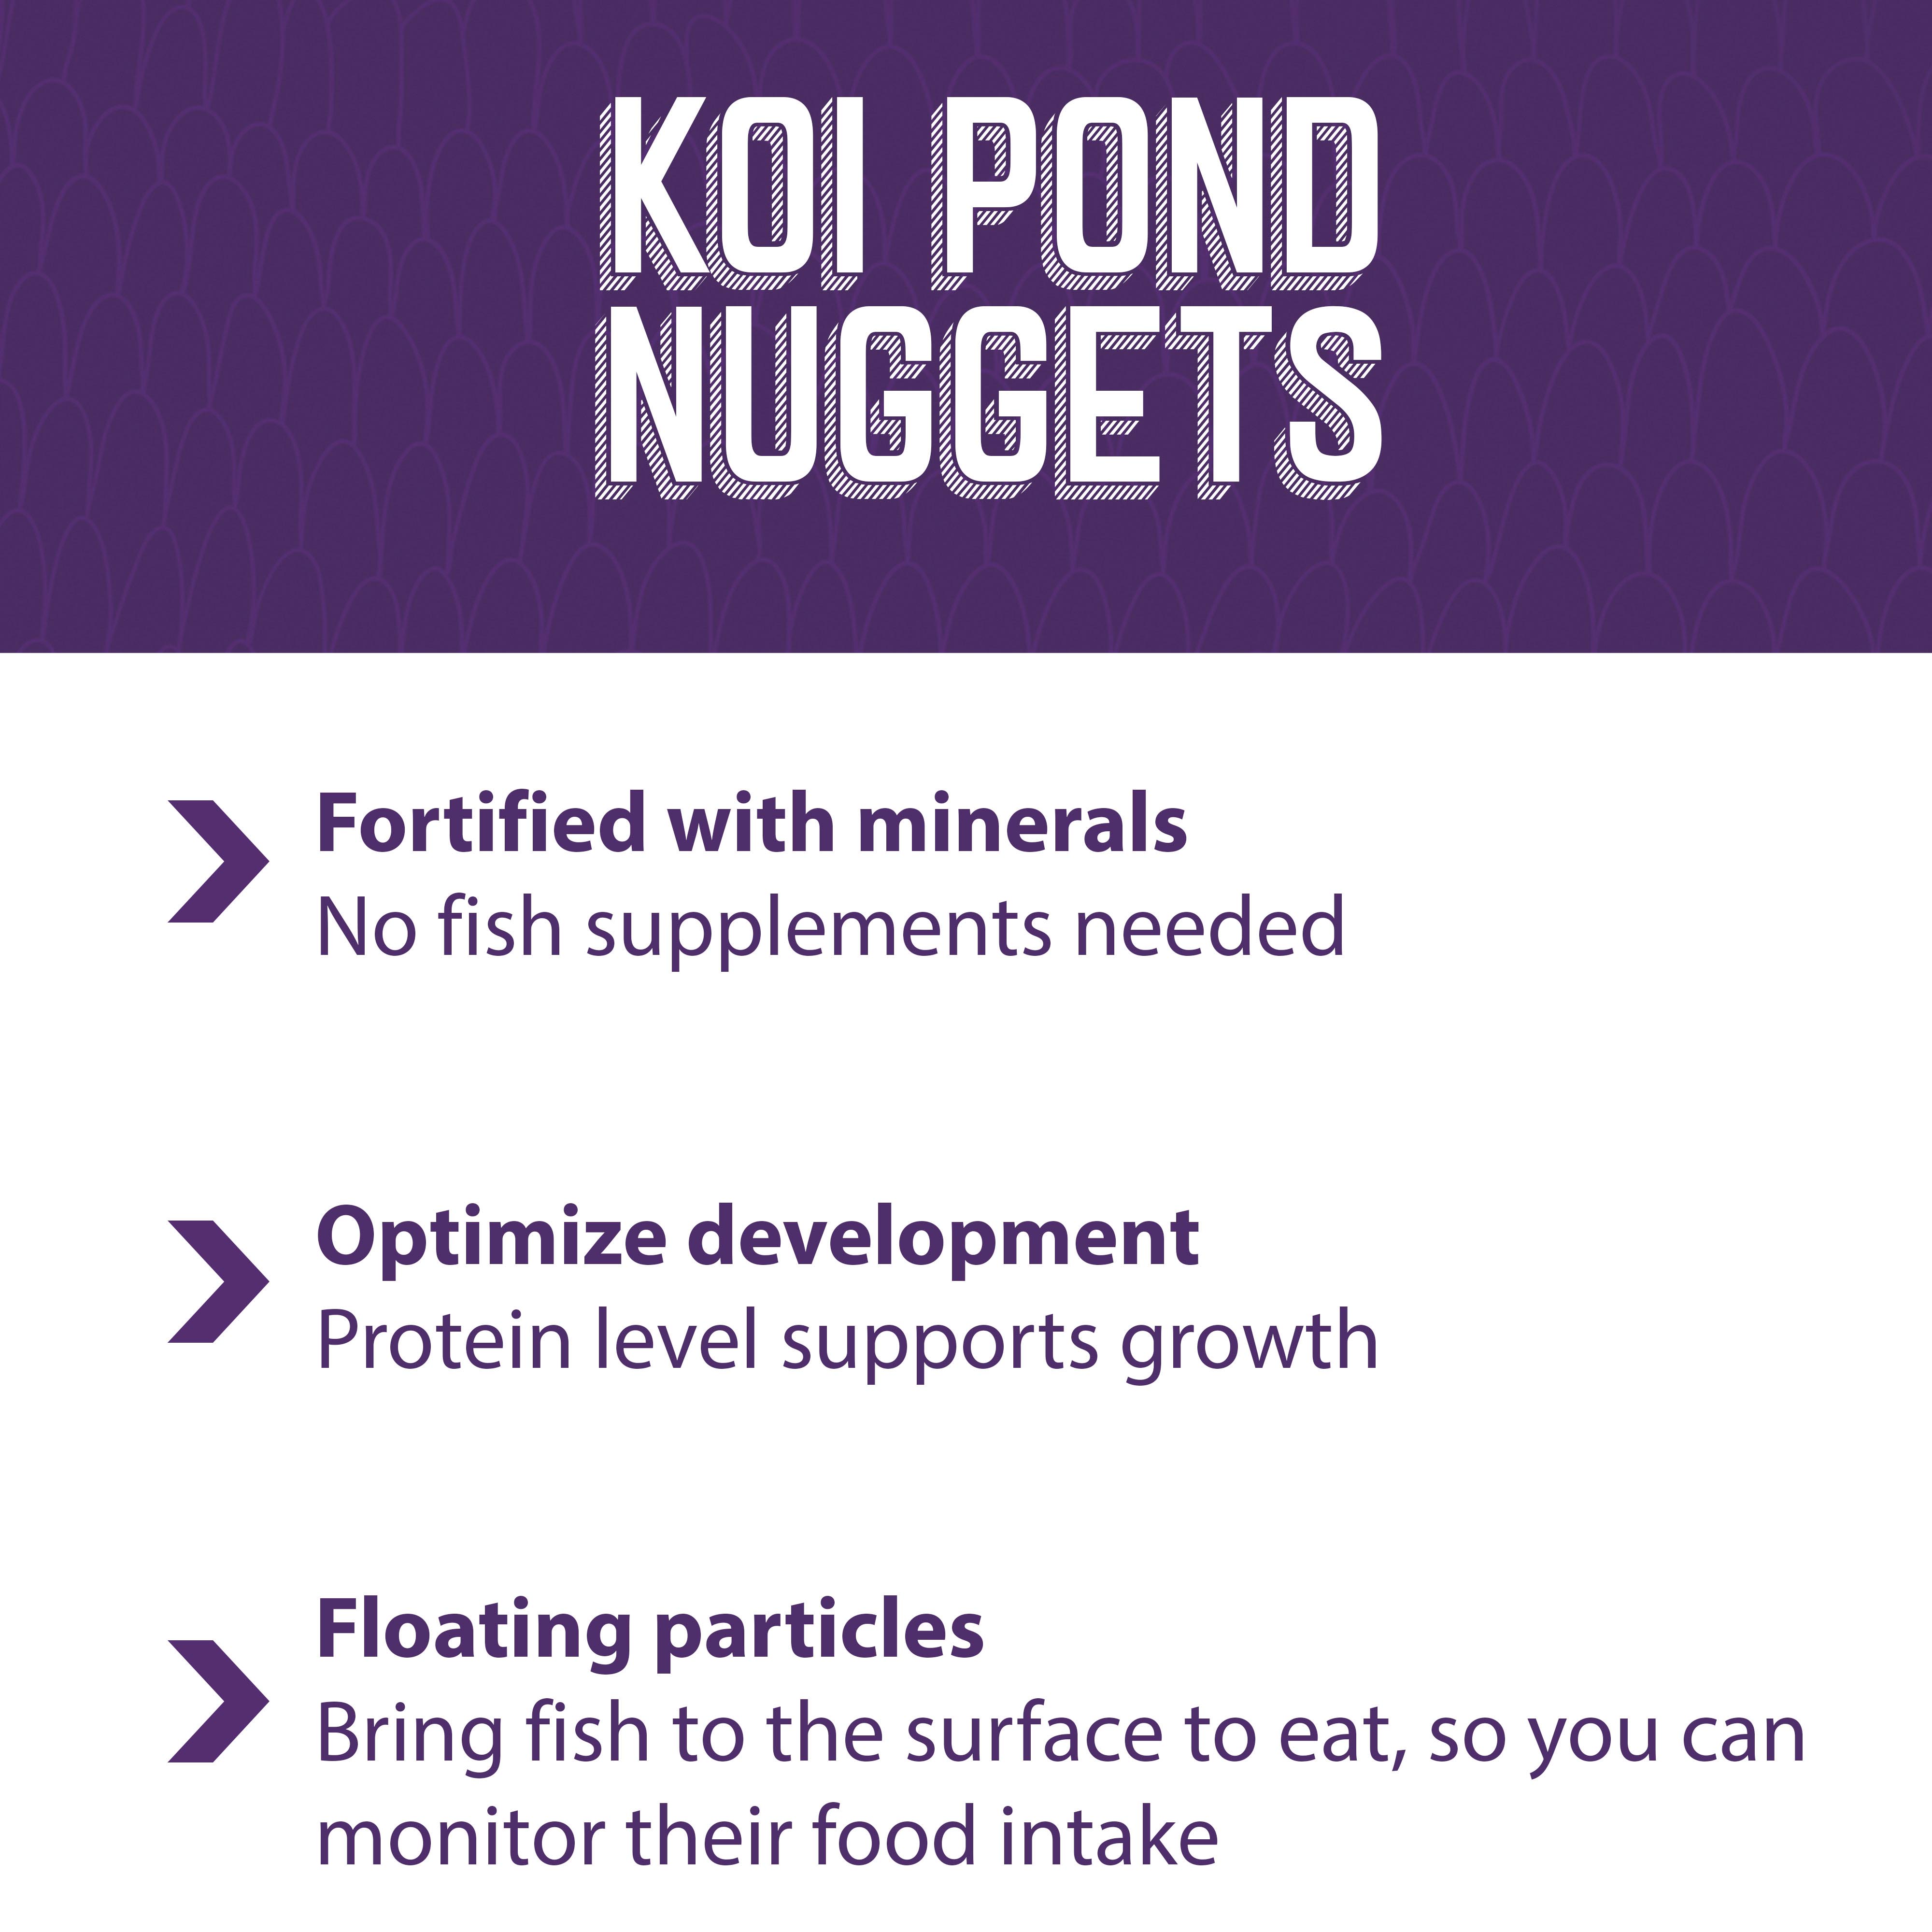 Koi Pond Nuggets require no supplementation 